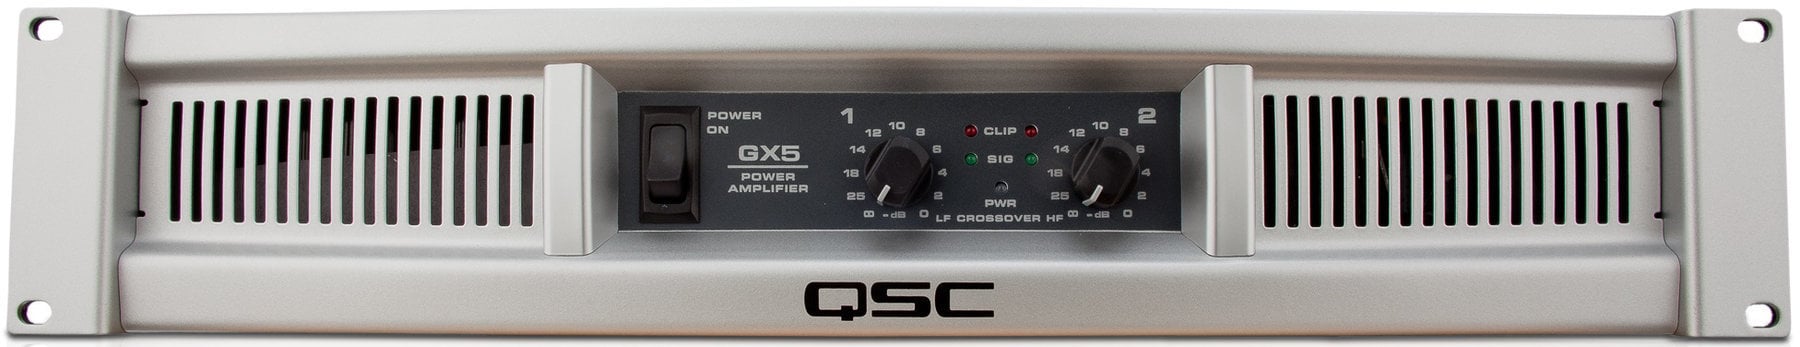 Endstufe Leistungsverstärker QSC GX5 Endstufe Leistungsverstärker